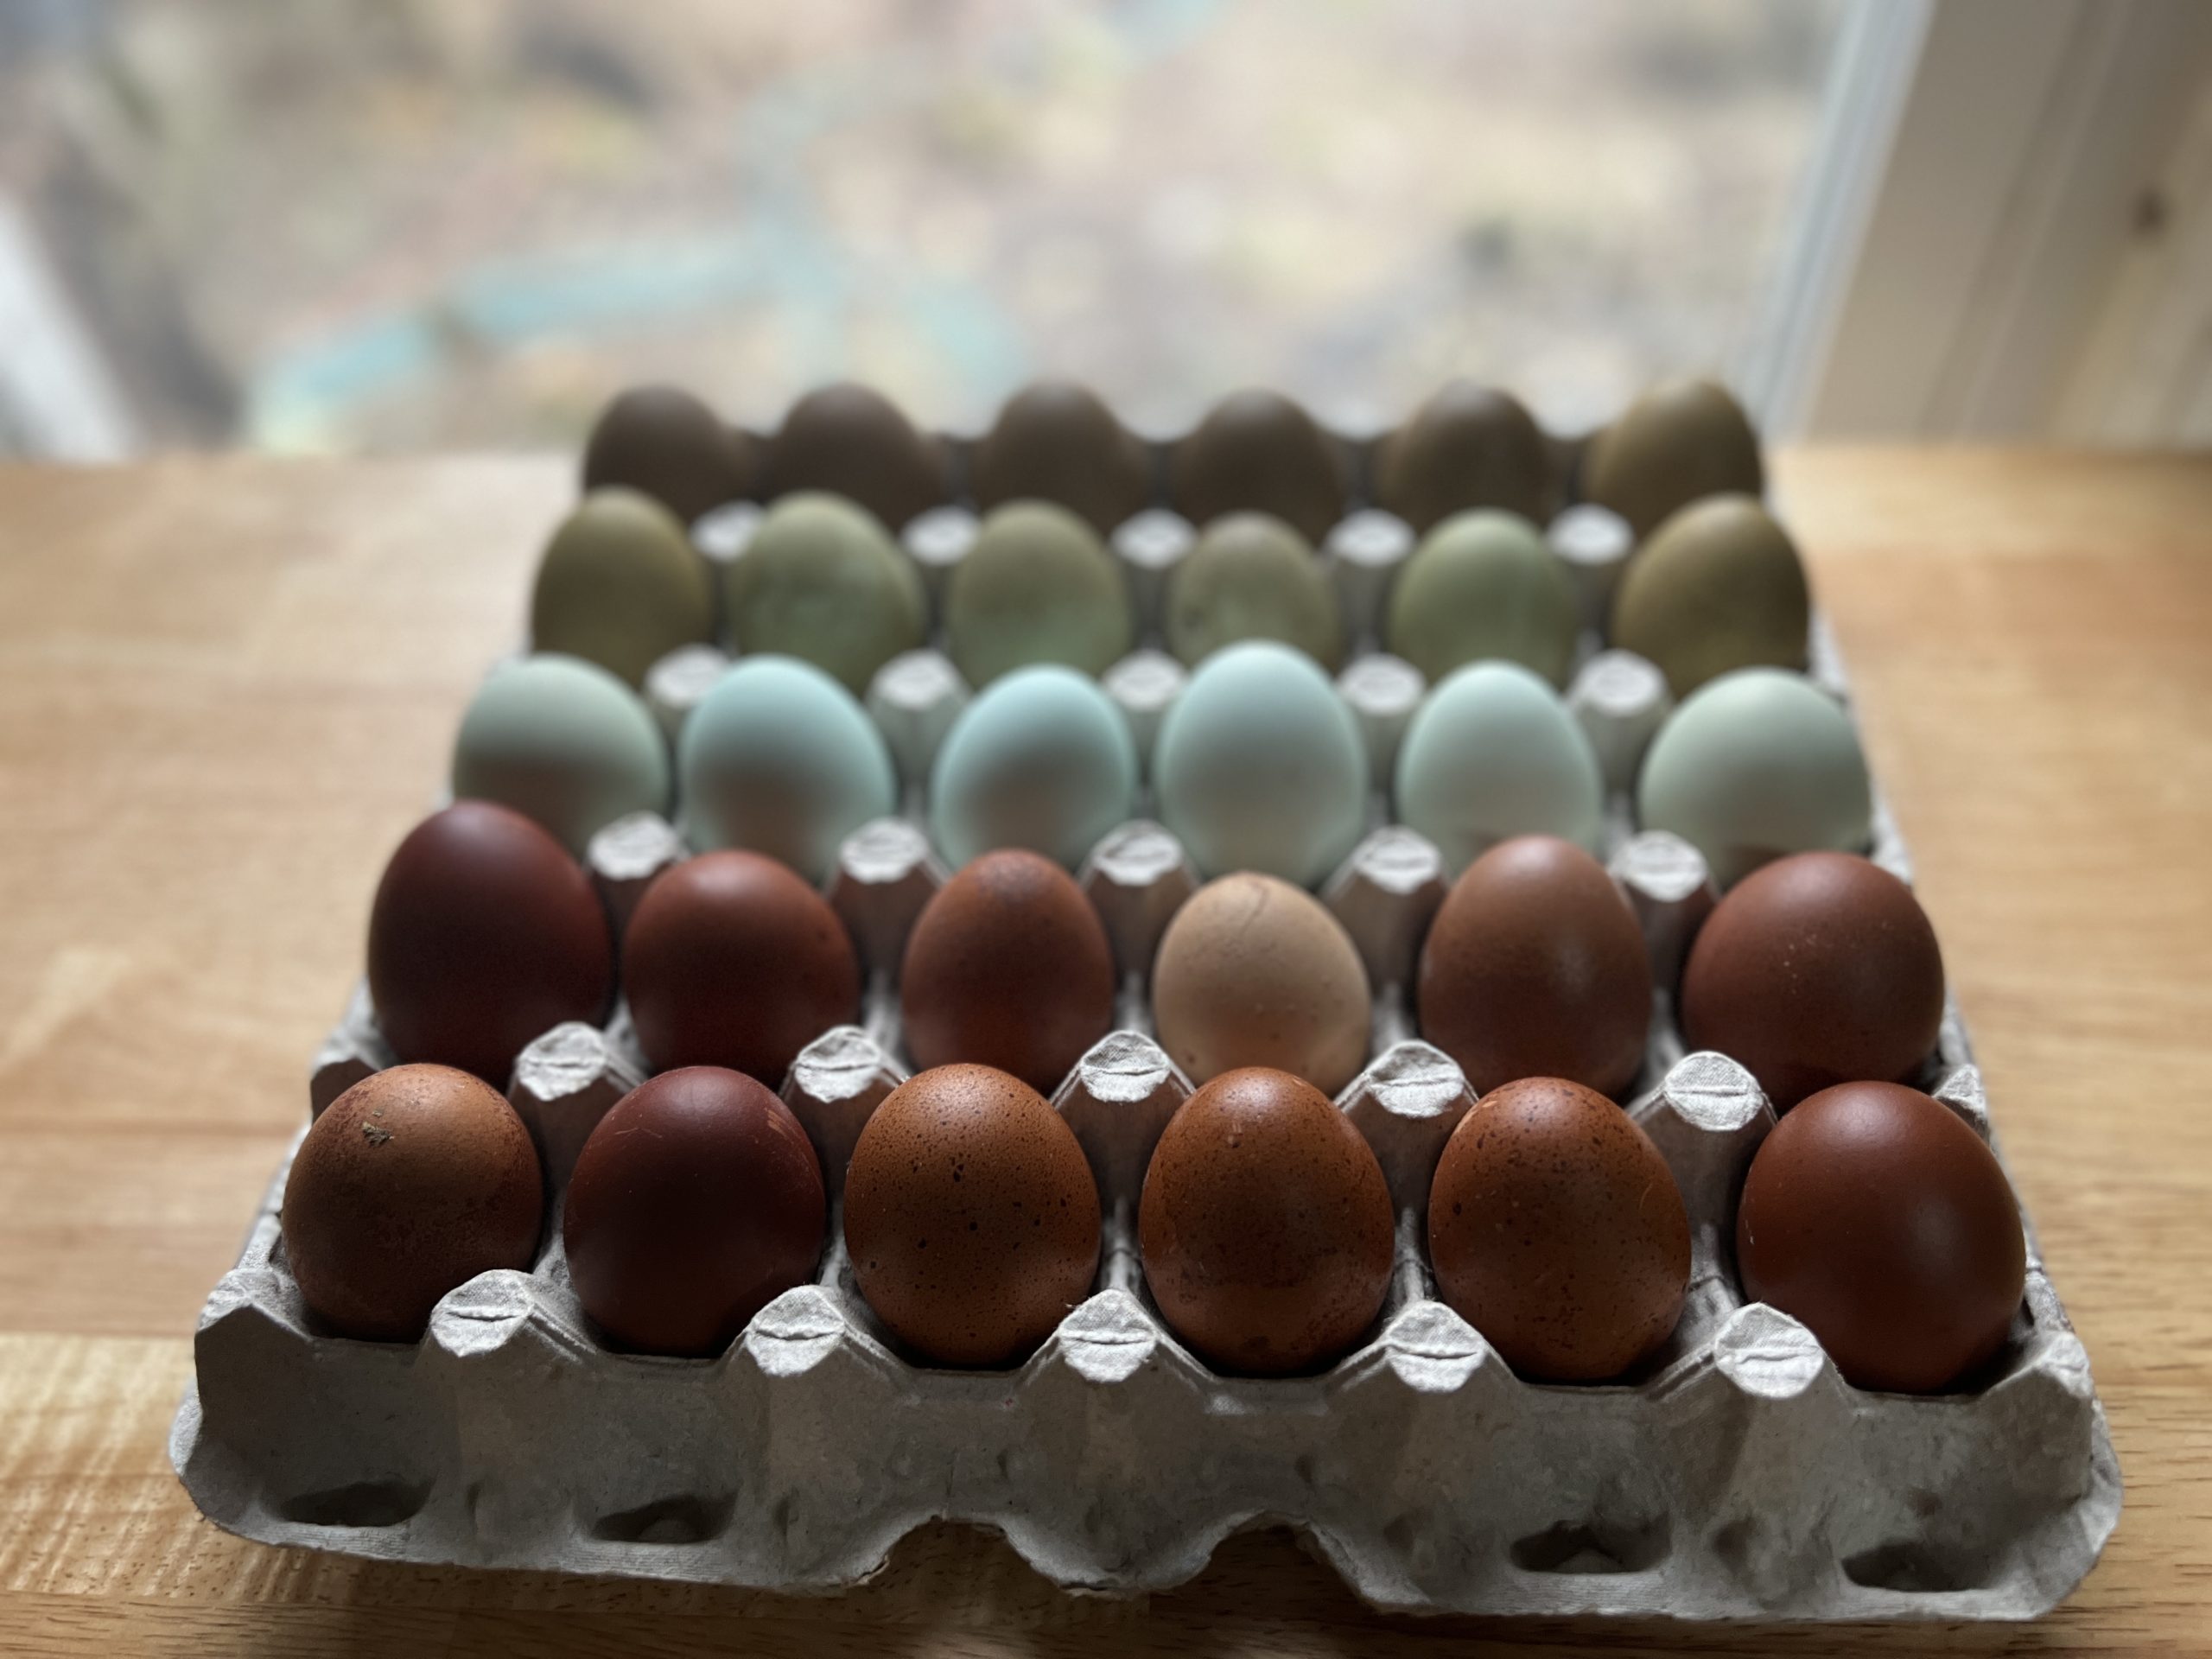 ameraucana egg color chart